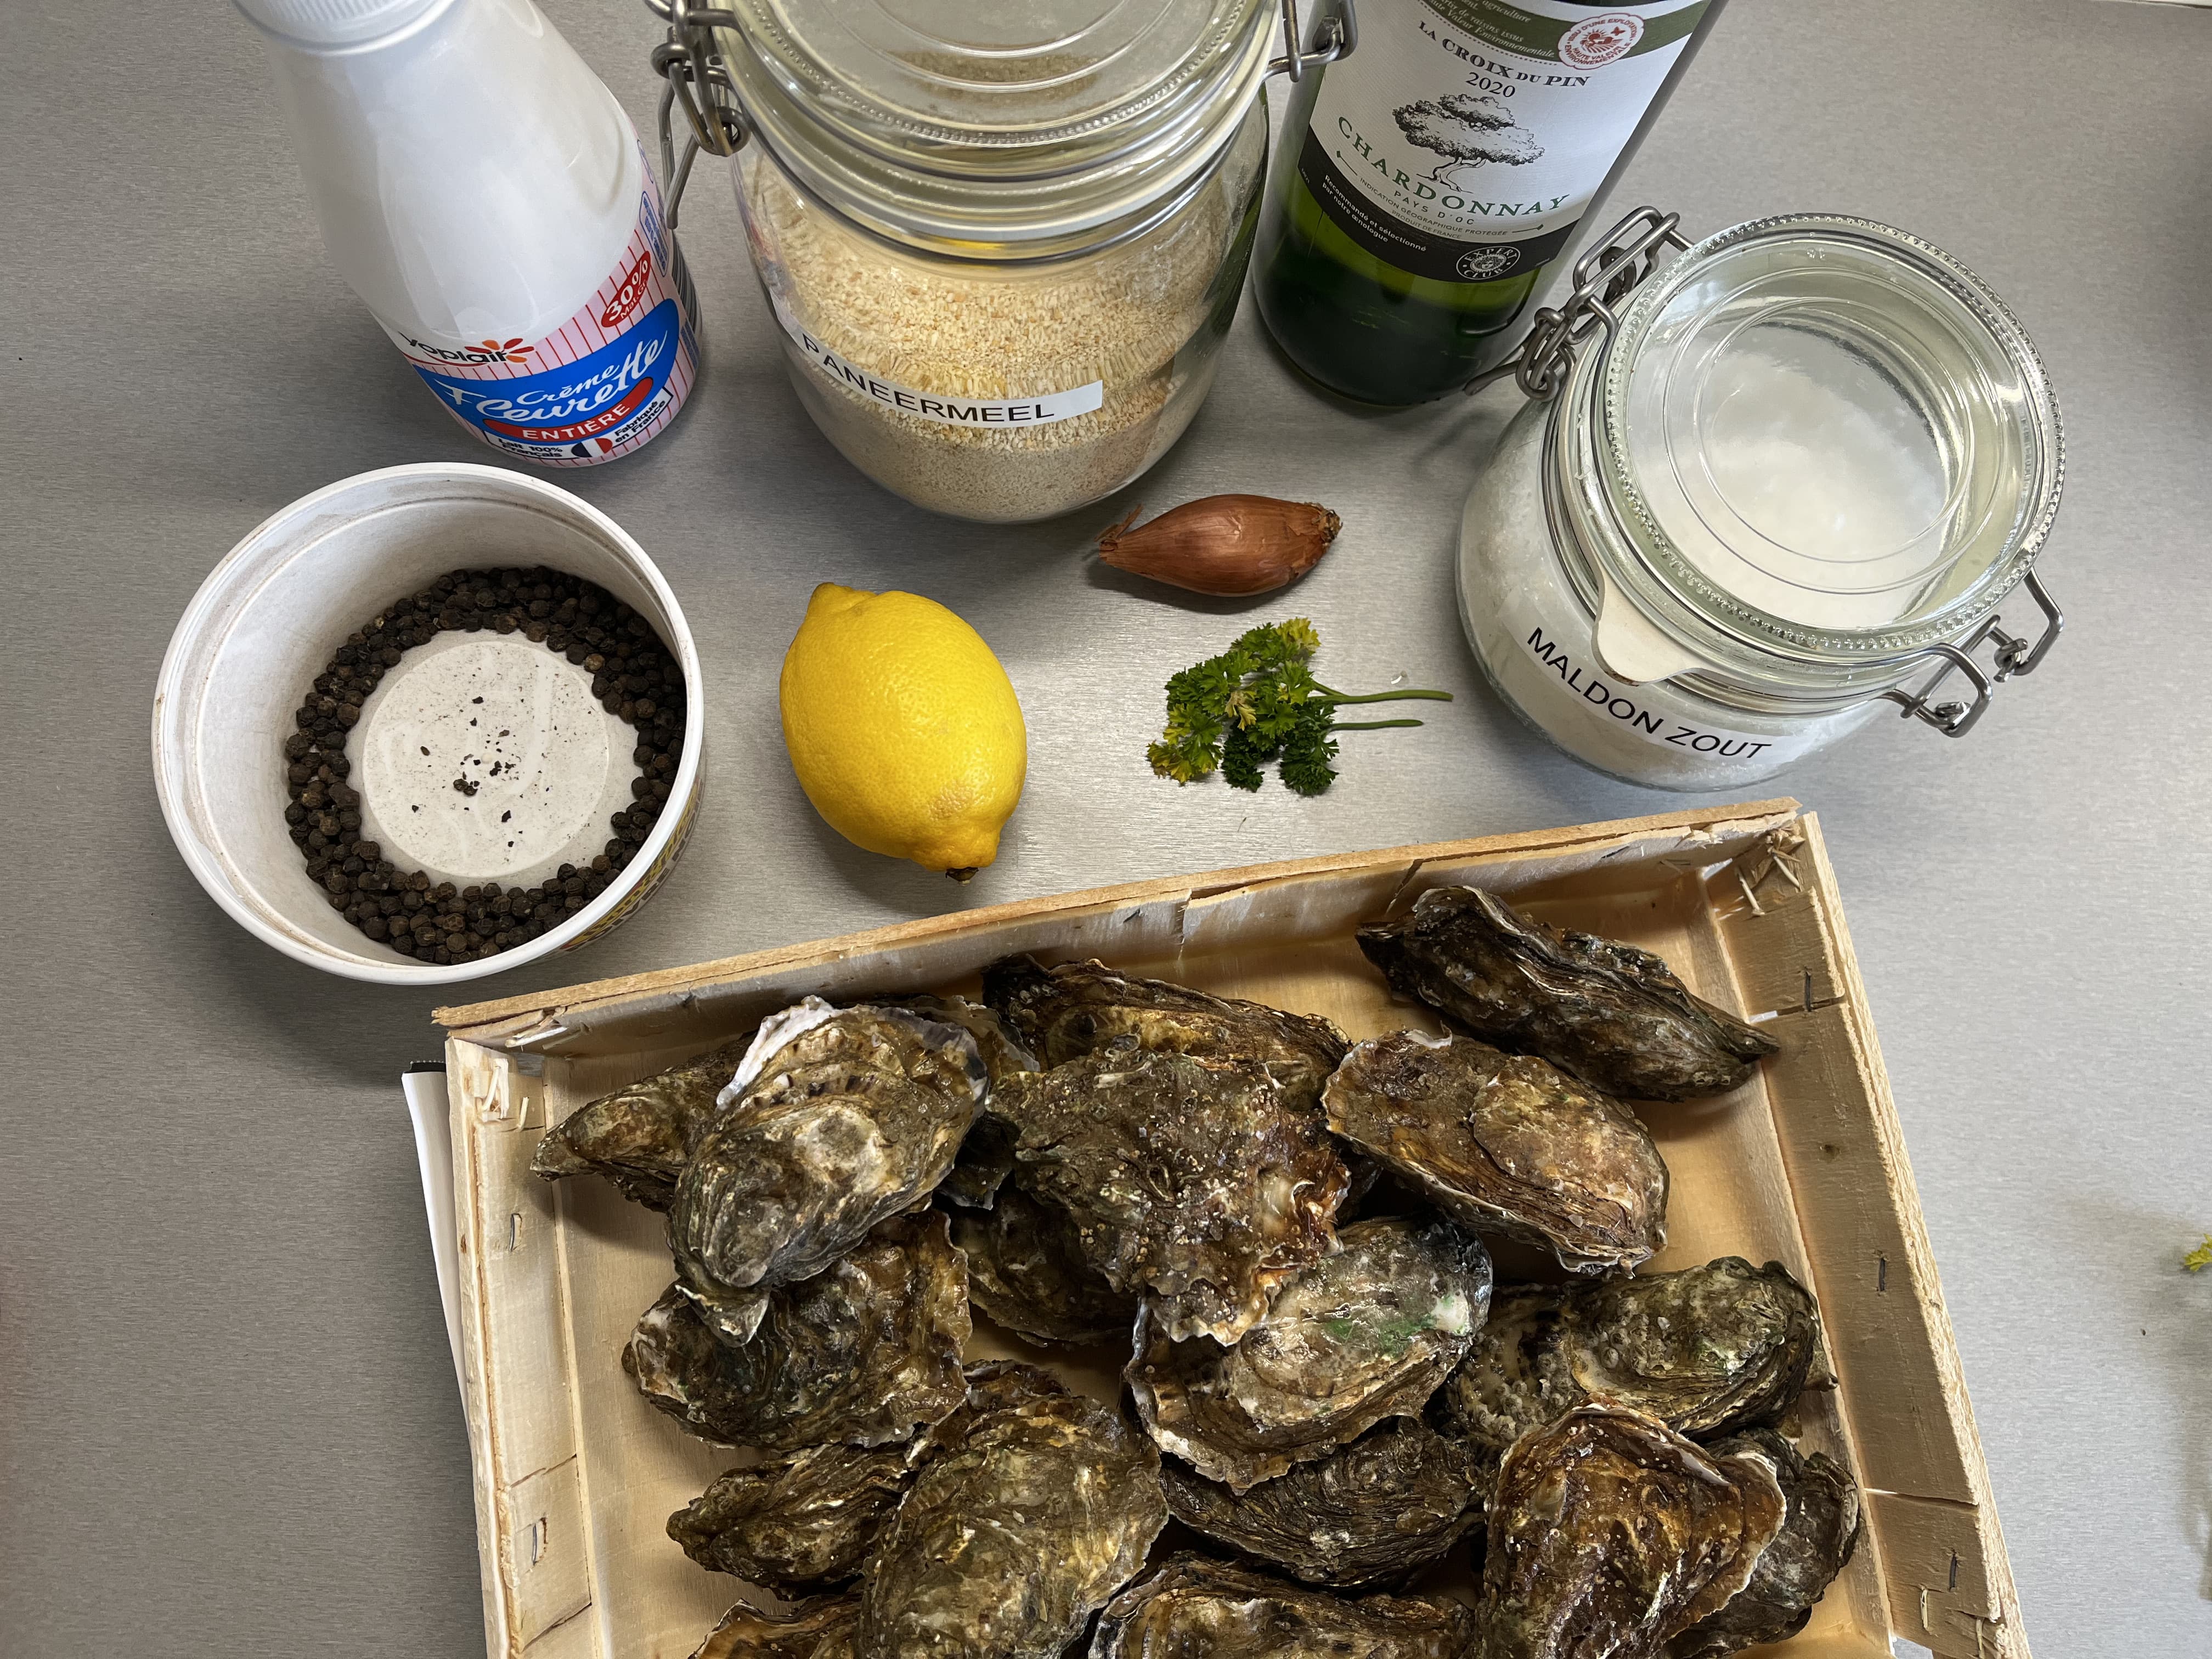 Oysters au gratin ingredients